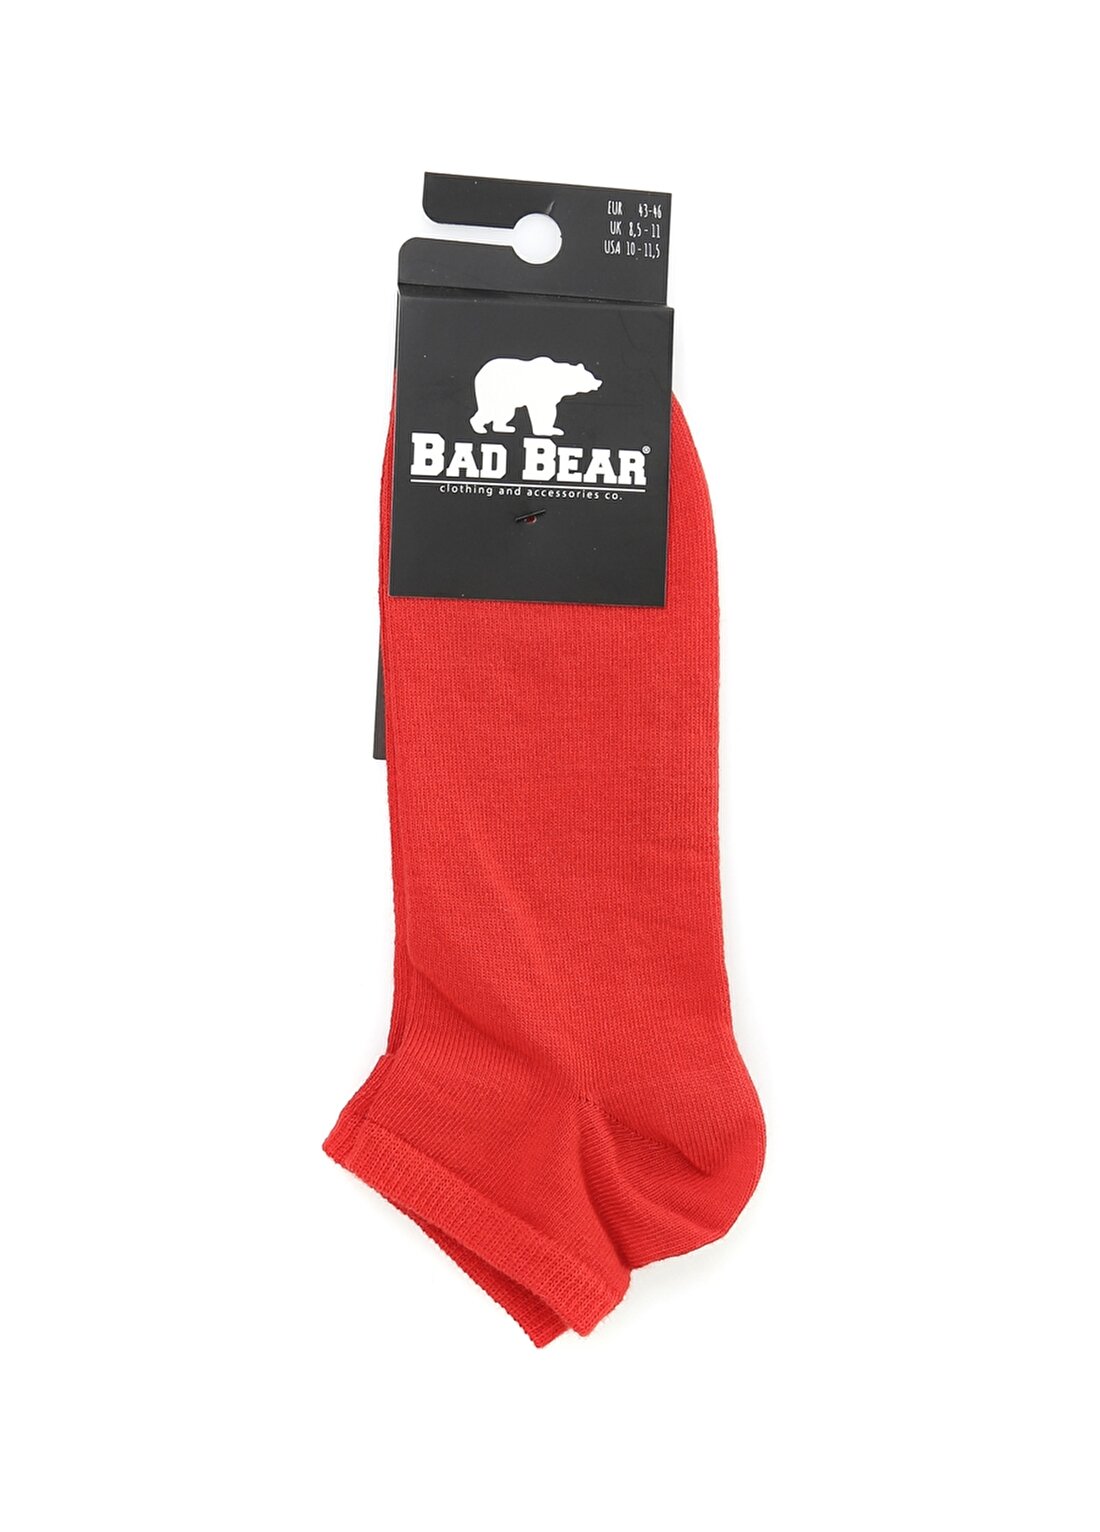 Bad Bear Bordo Çorap